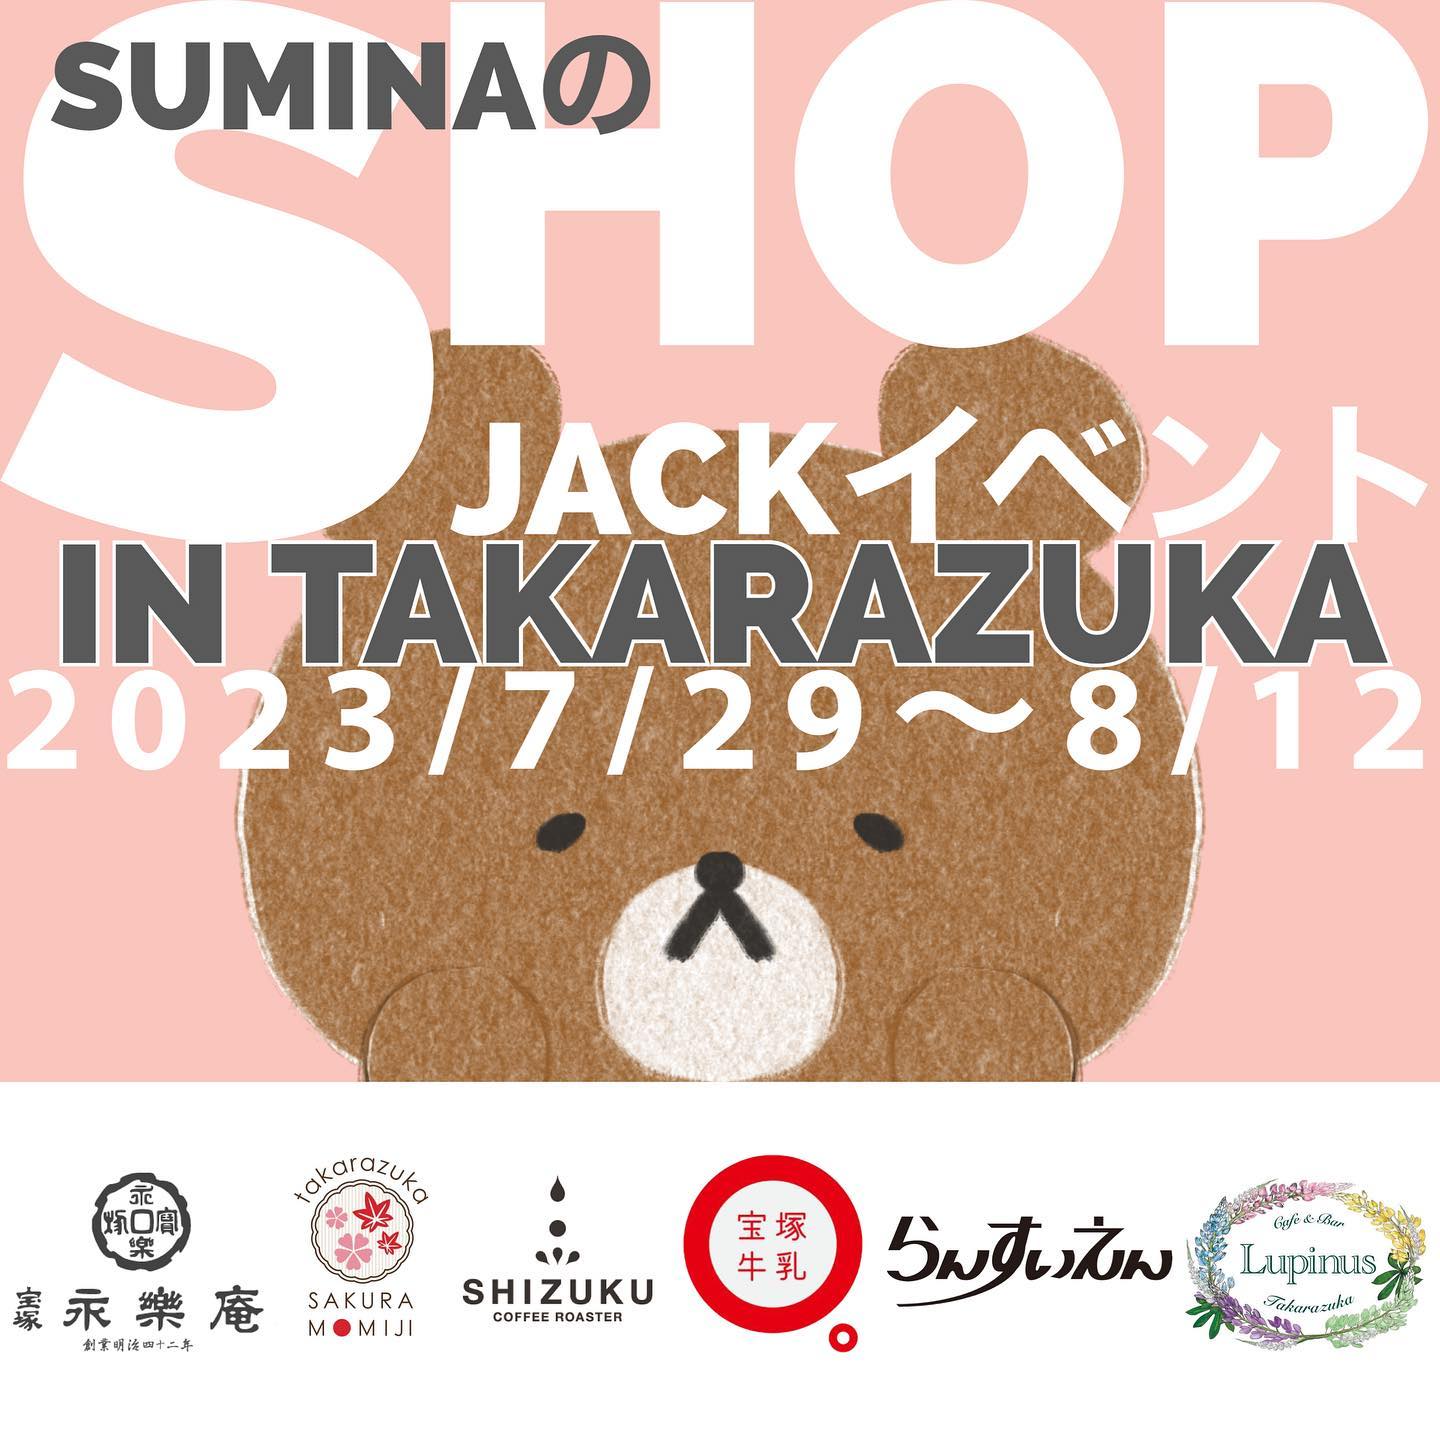 SUMINAのSHOP JACKイベント IN TAKARAZUKA